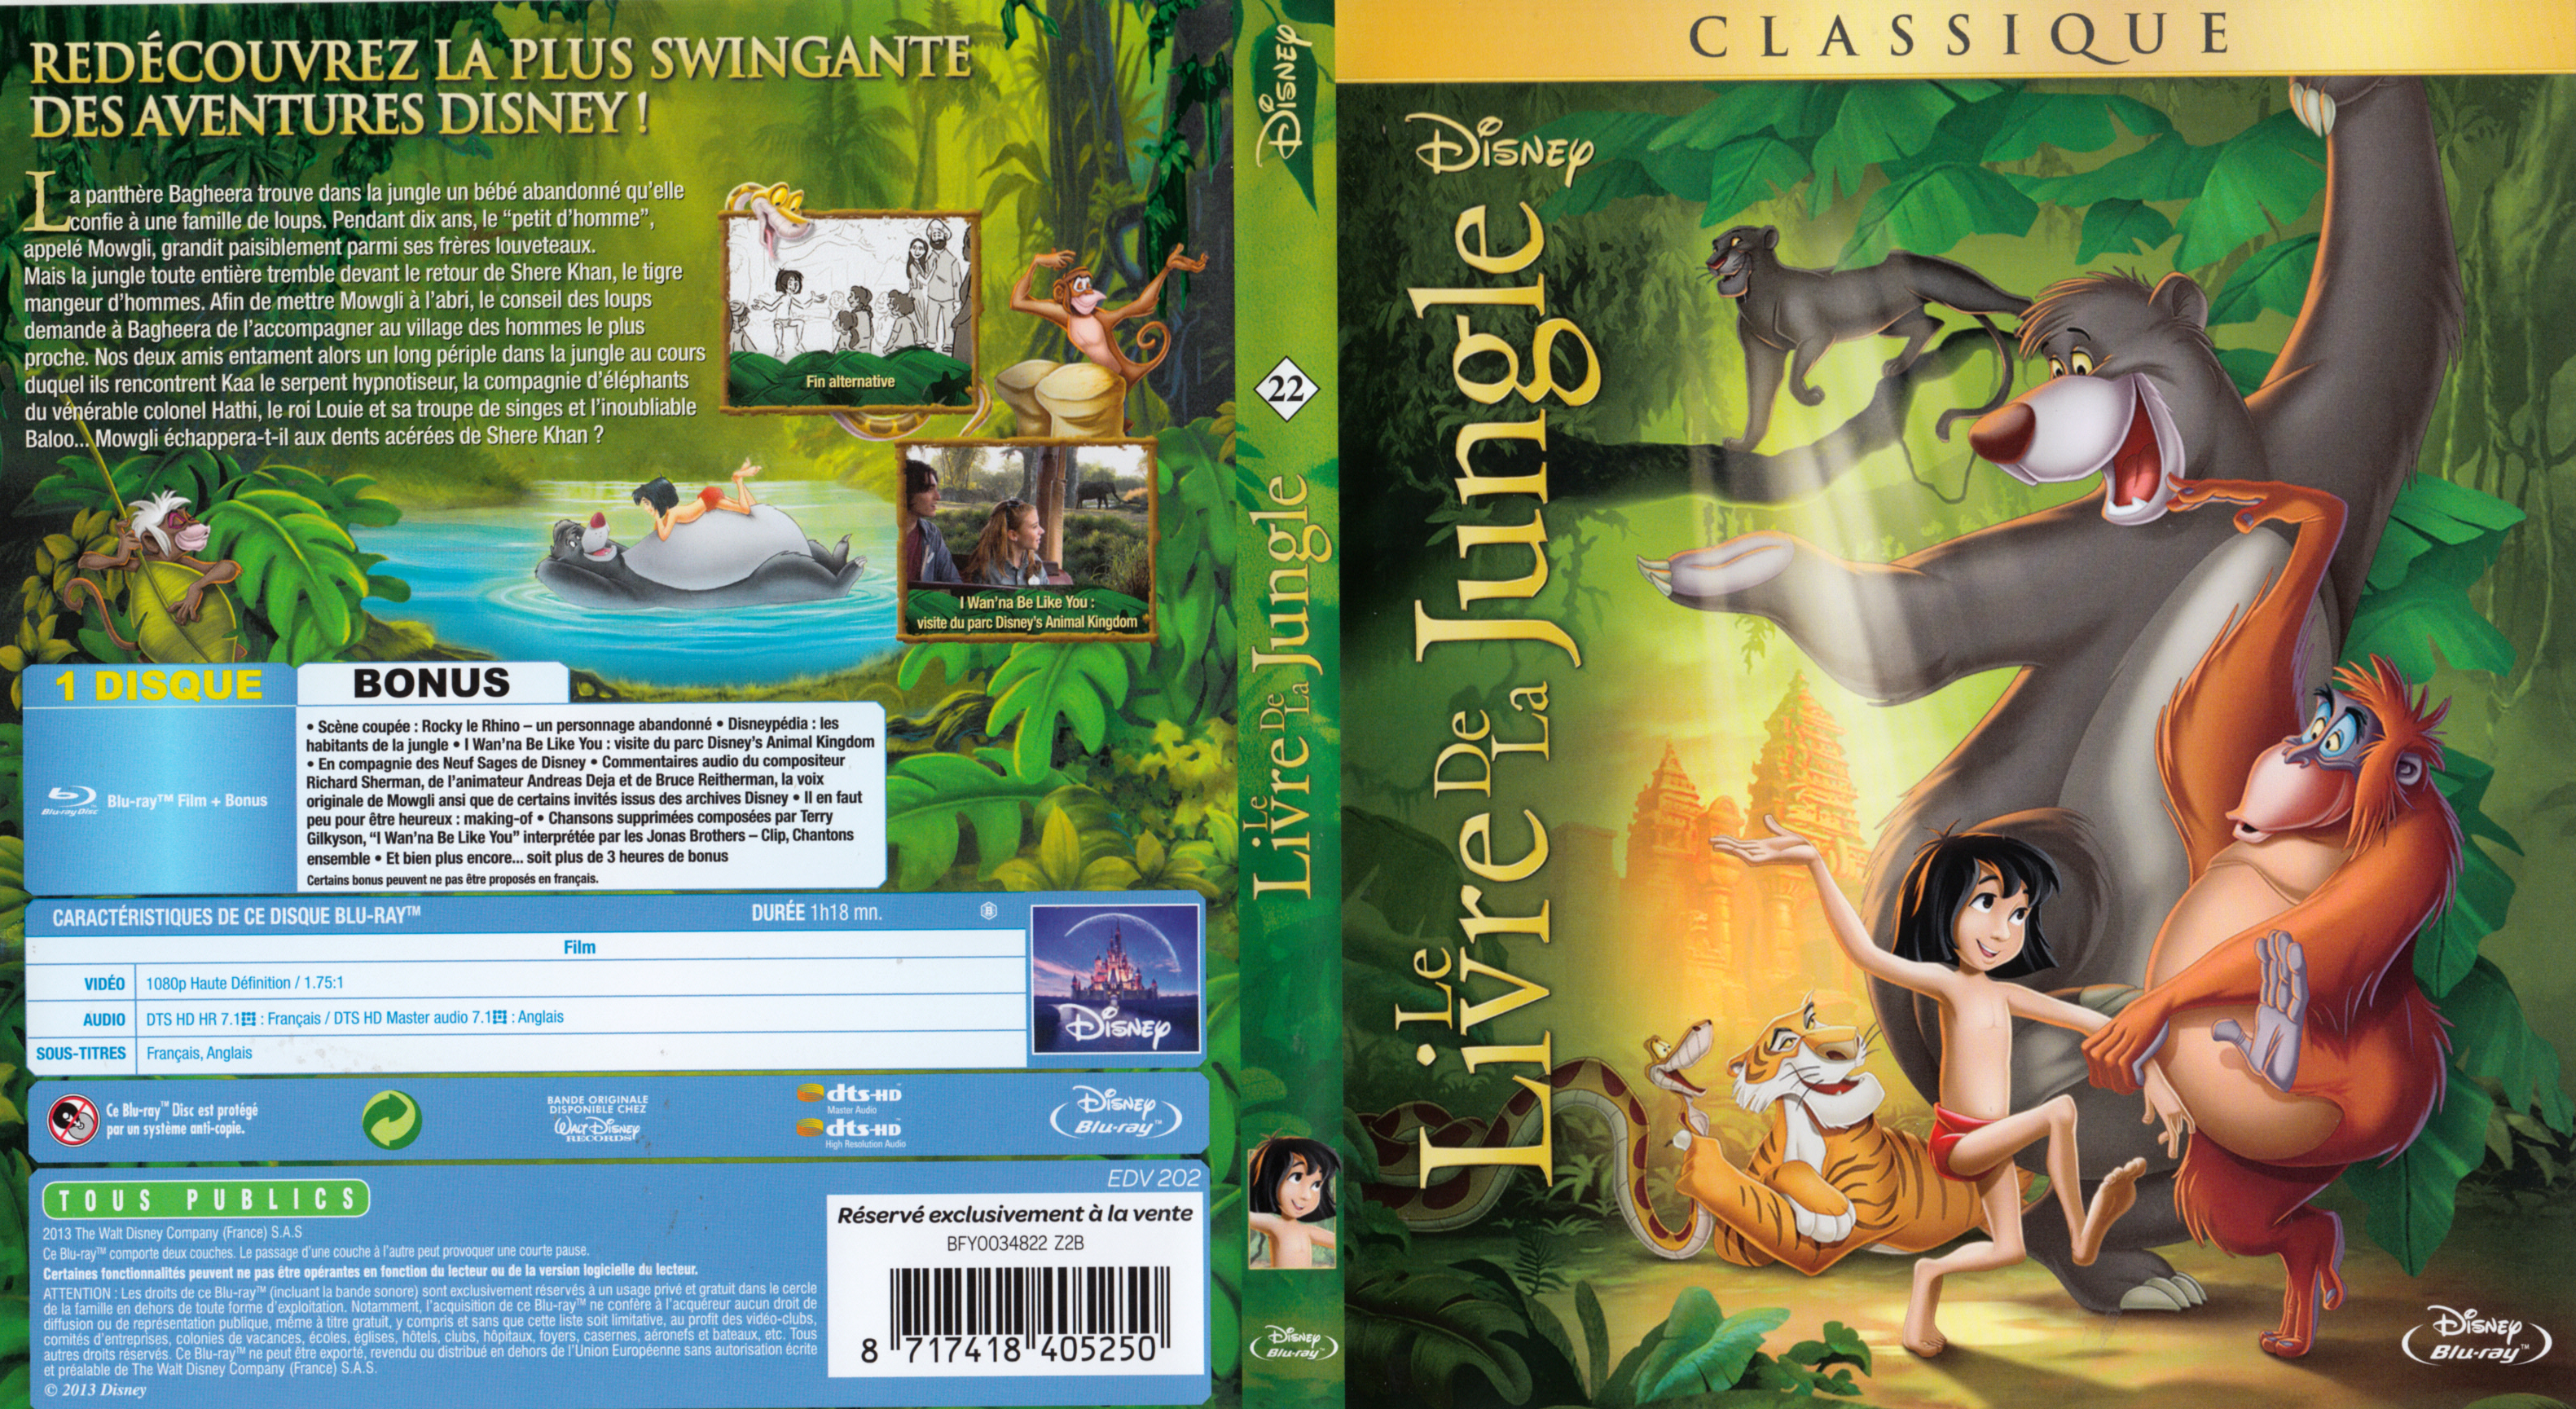 Jaquette DVD Le livre de la jungle (BLU-RAY) v2